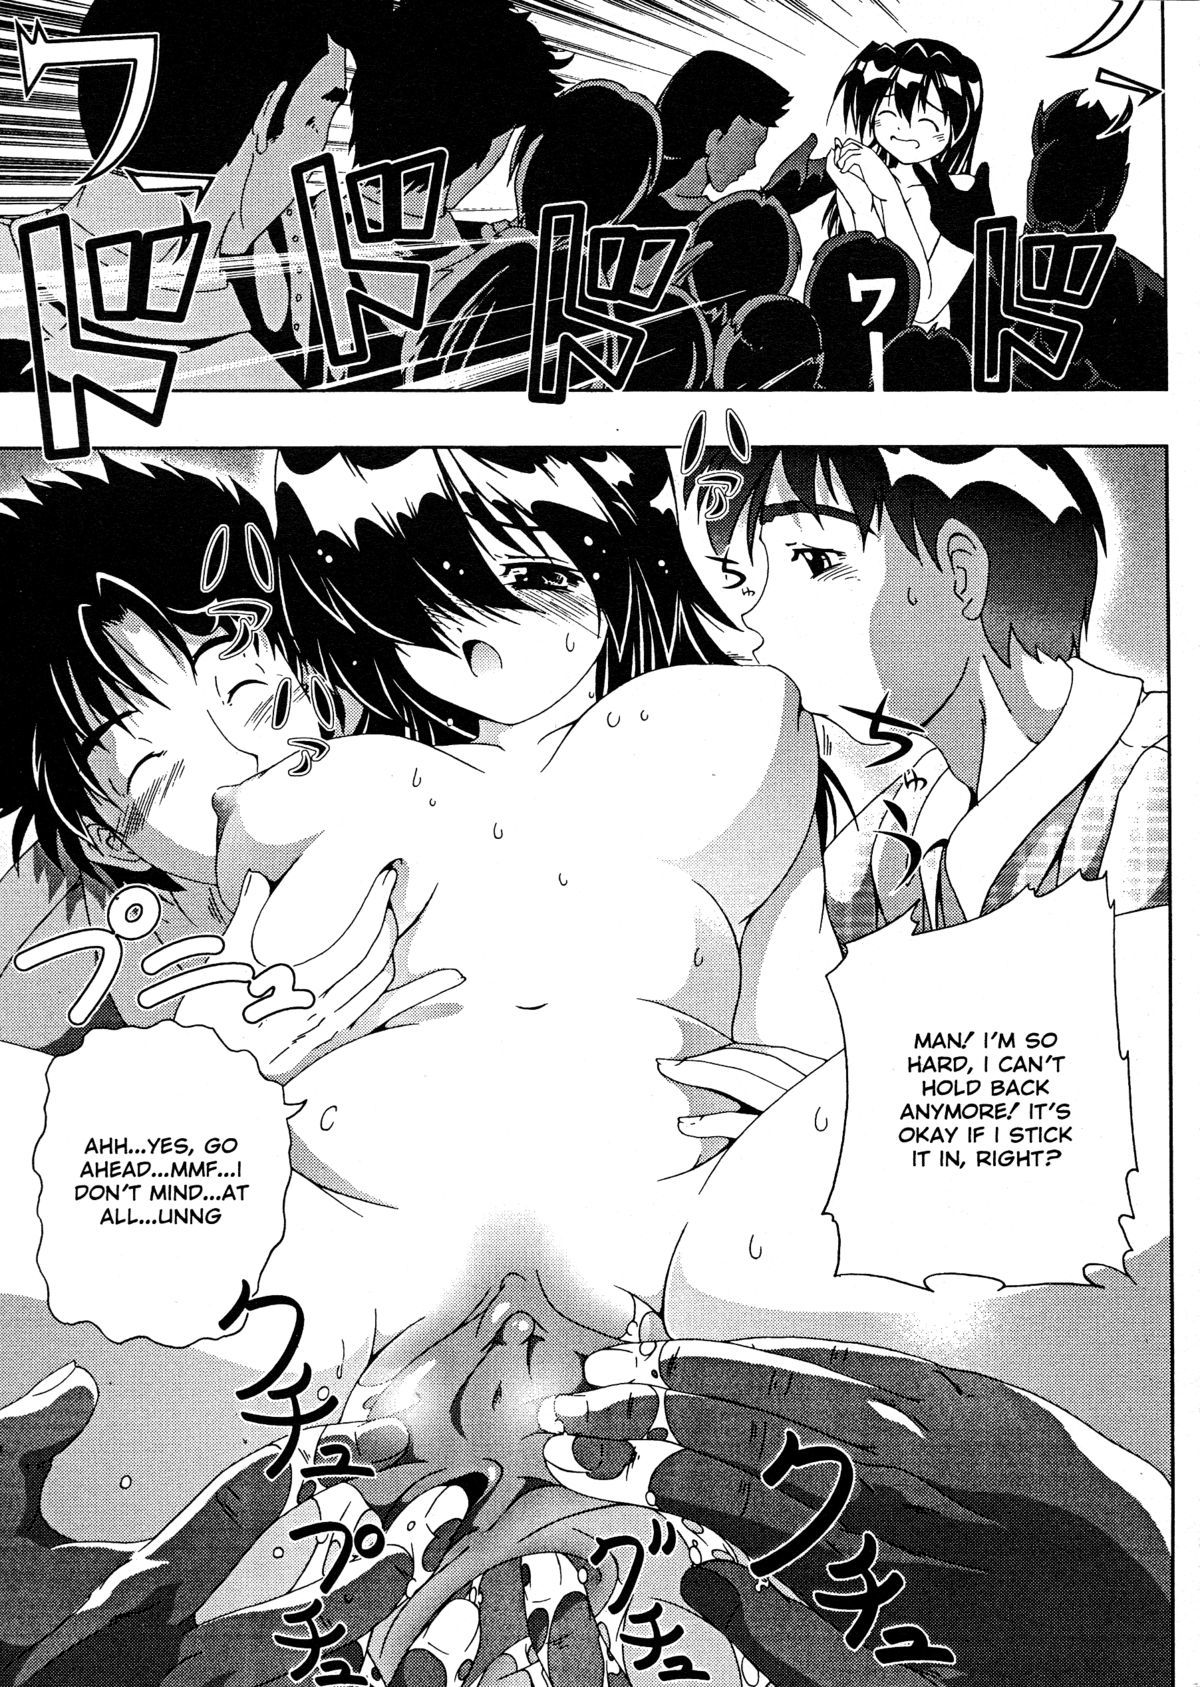 Flashbang!Hi-res 14 hentai manga